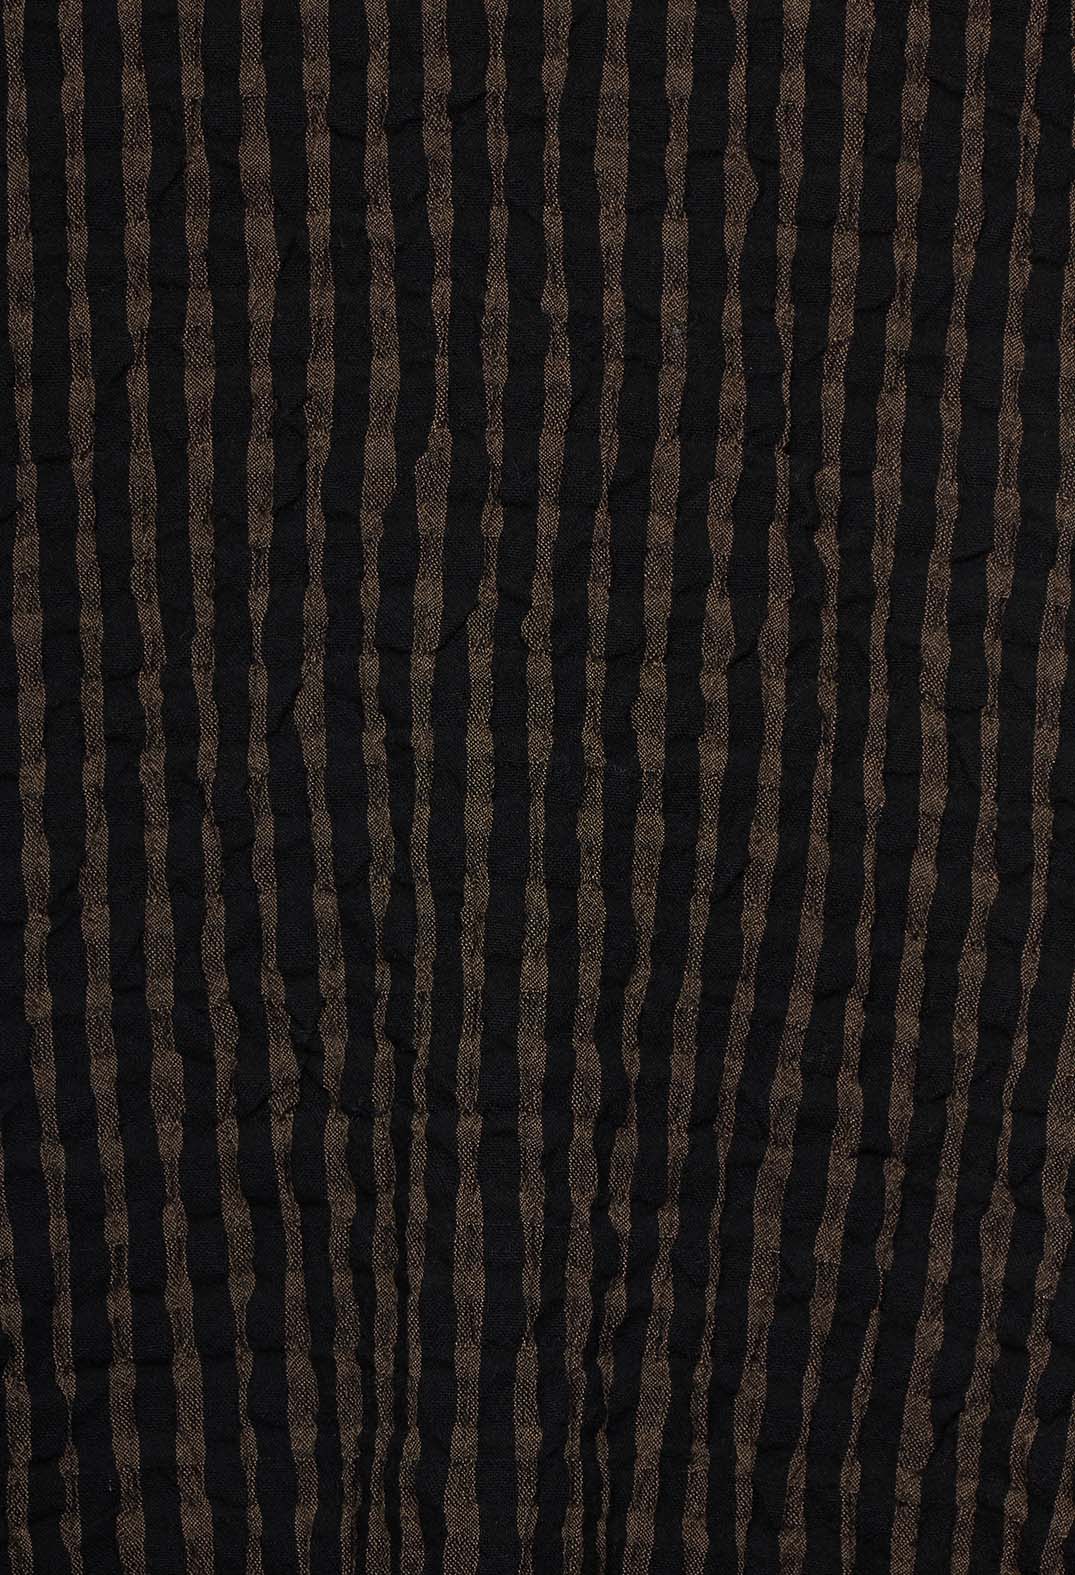 Horri Tunic in Grey and Brown Stripe